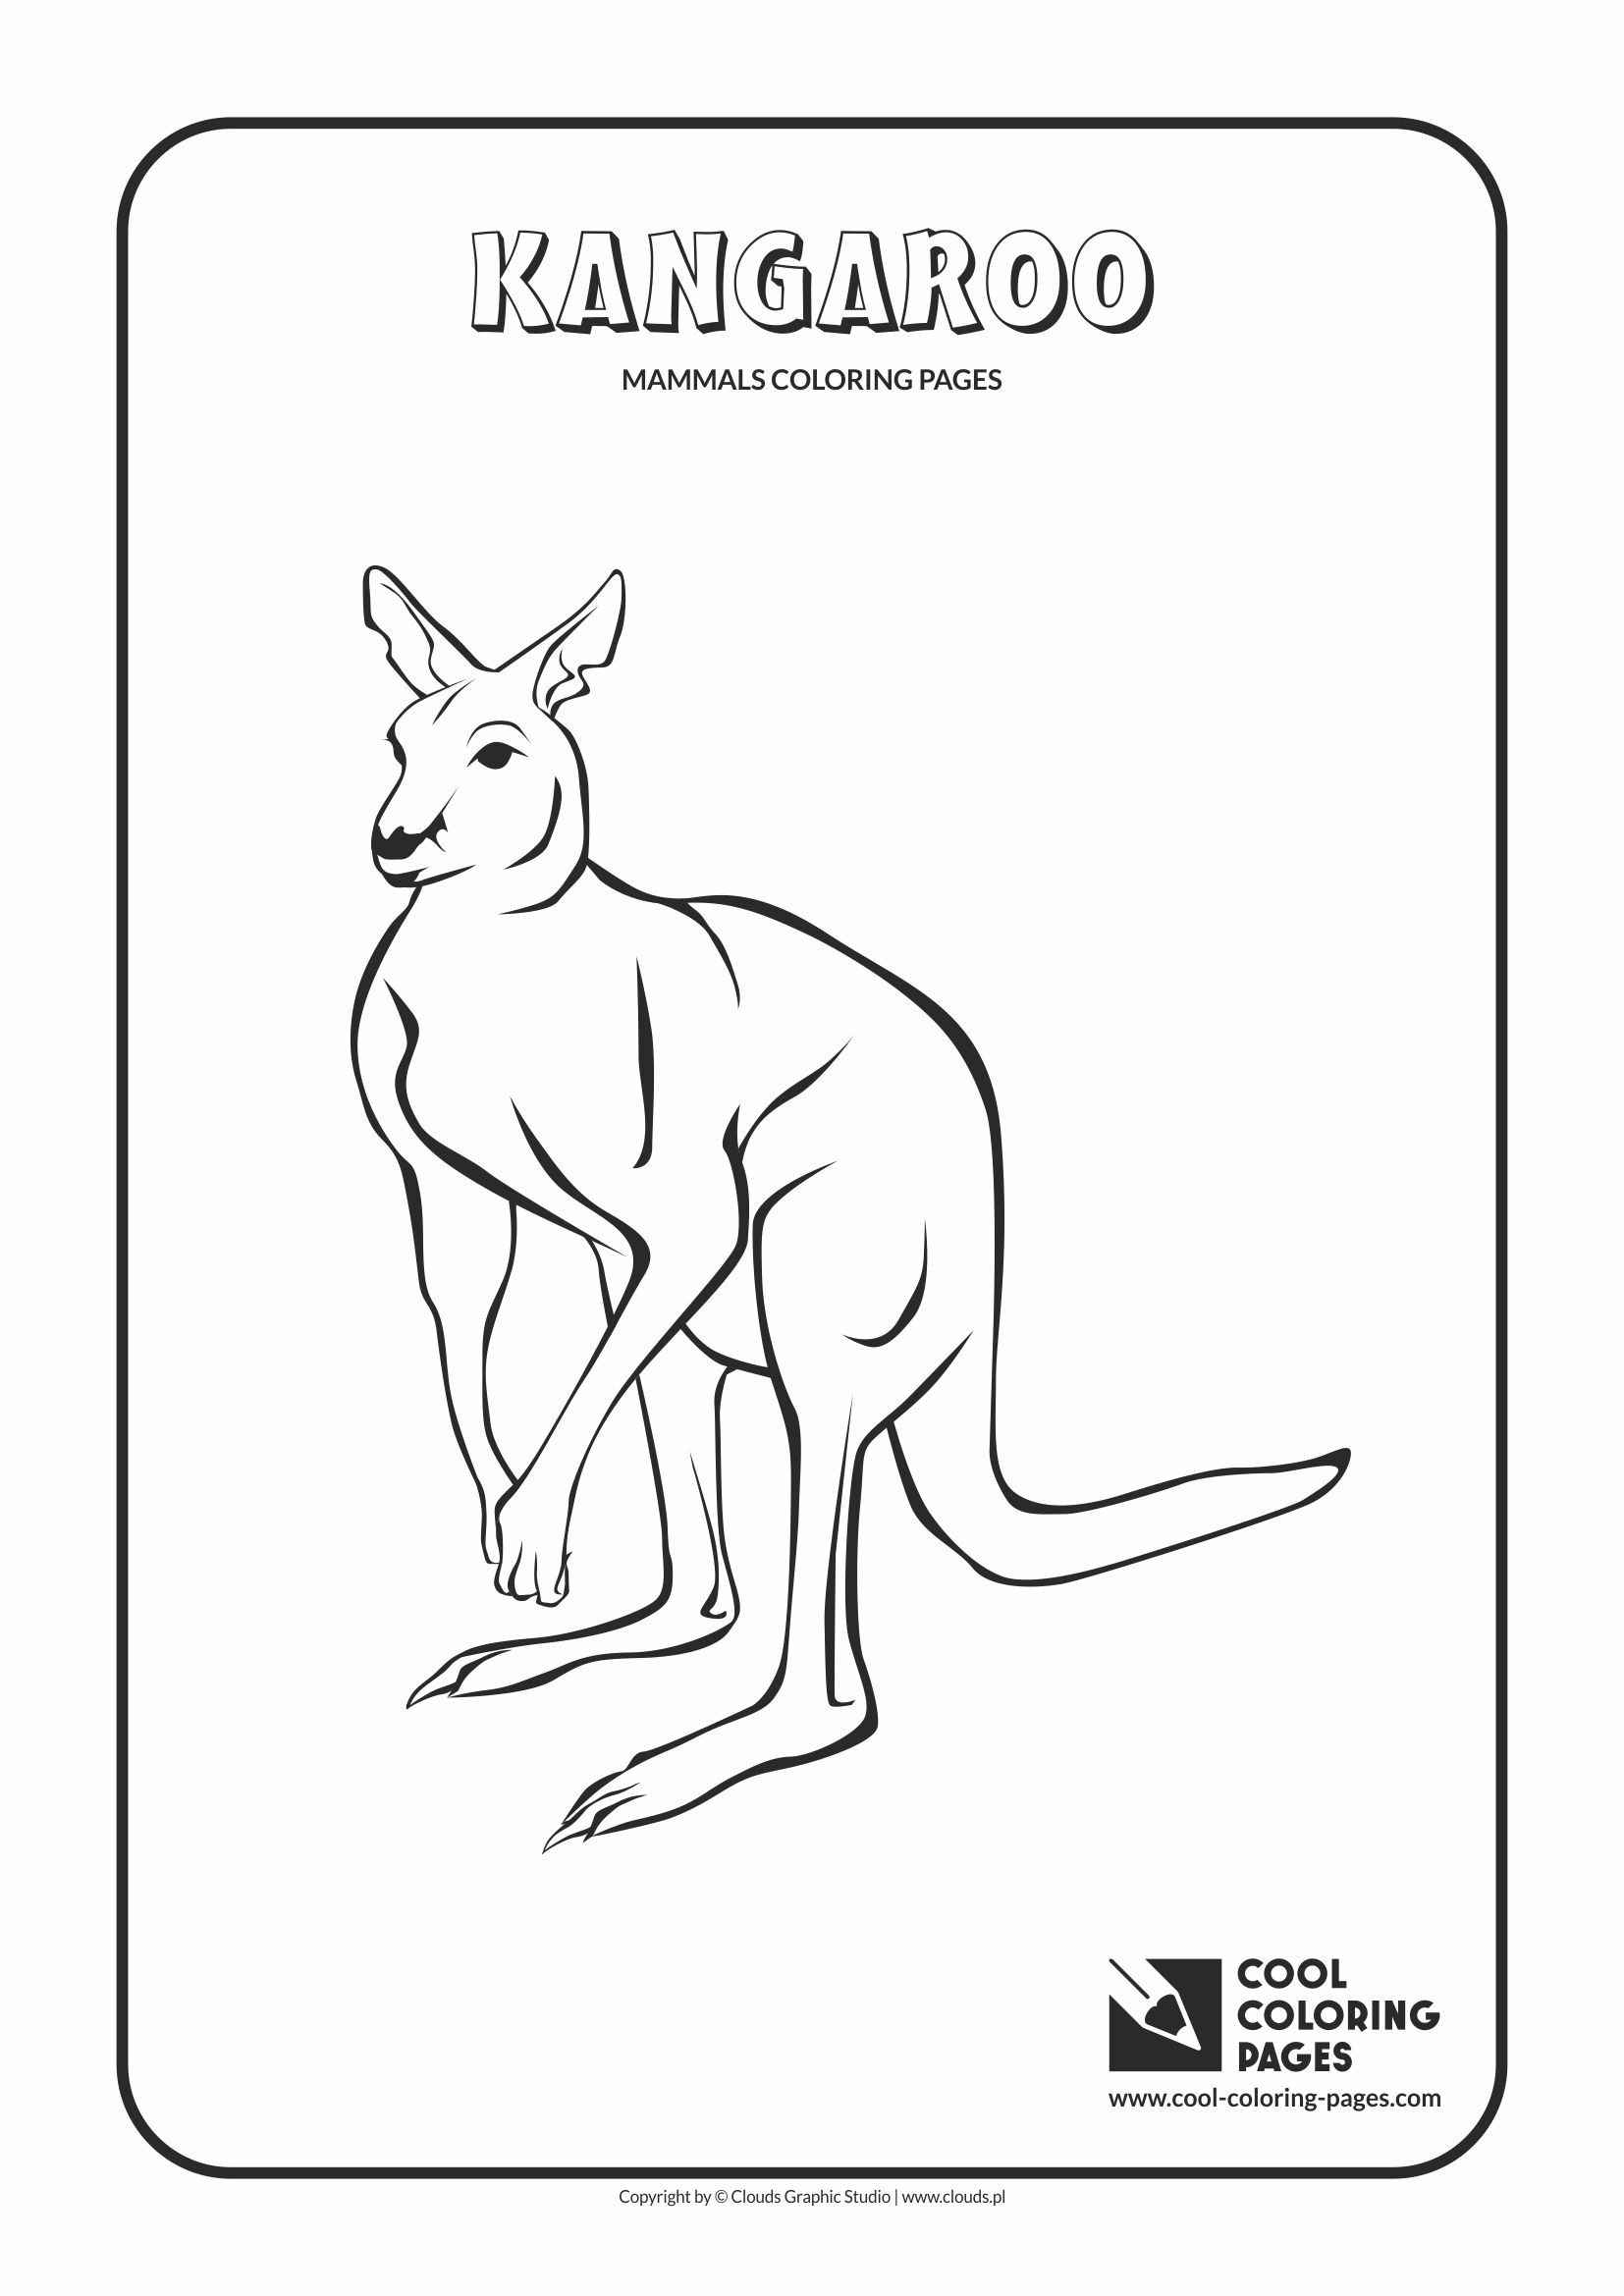 Cool Coloring Pages - Animals / Kangaroo / Coloring page with kangaroo